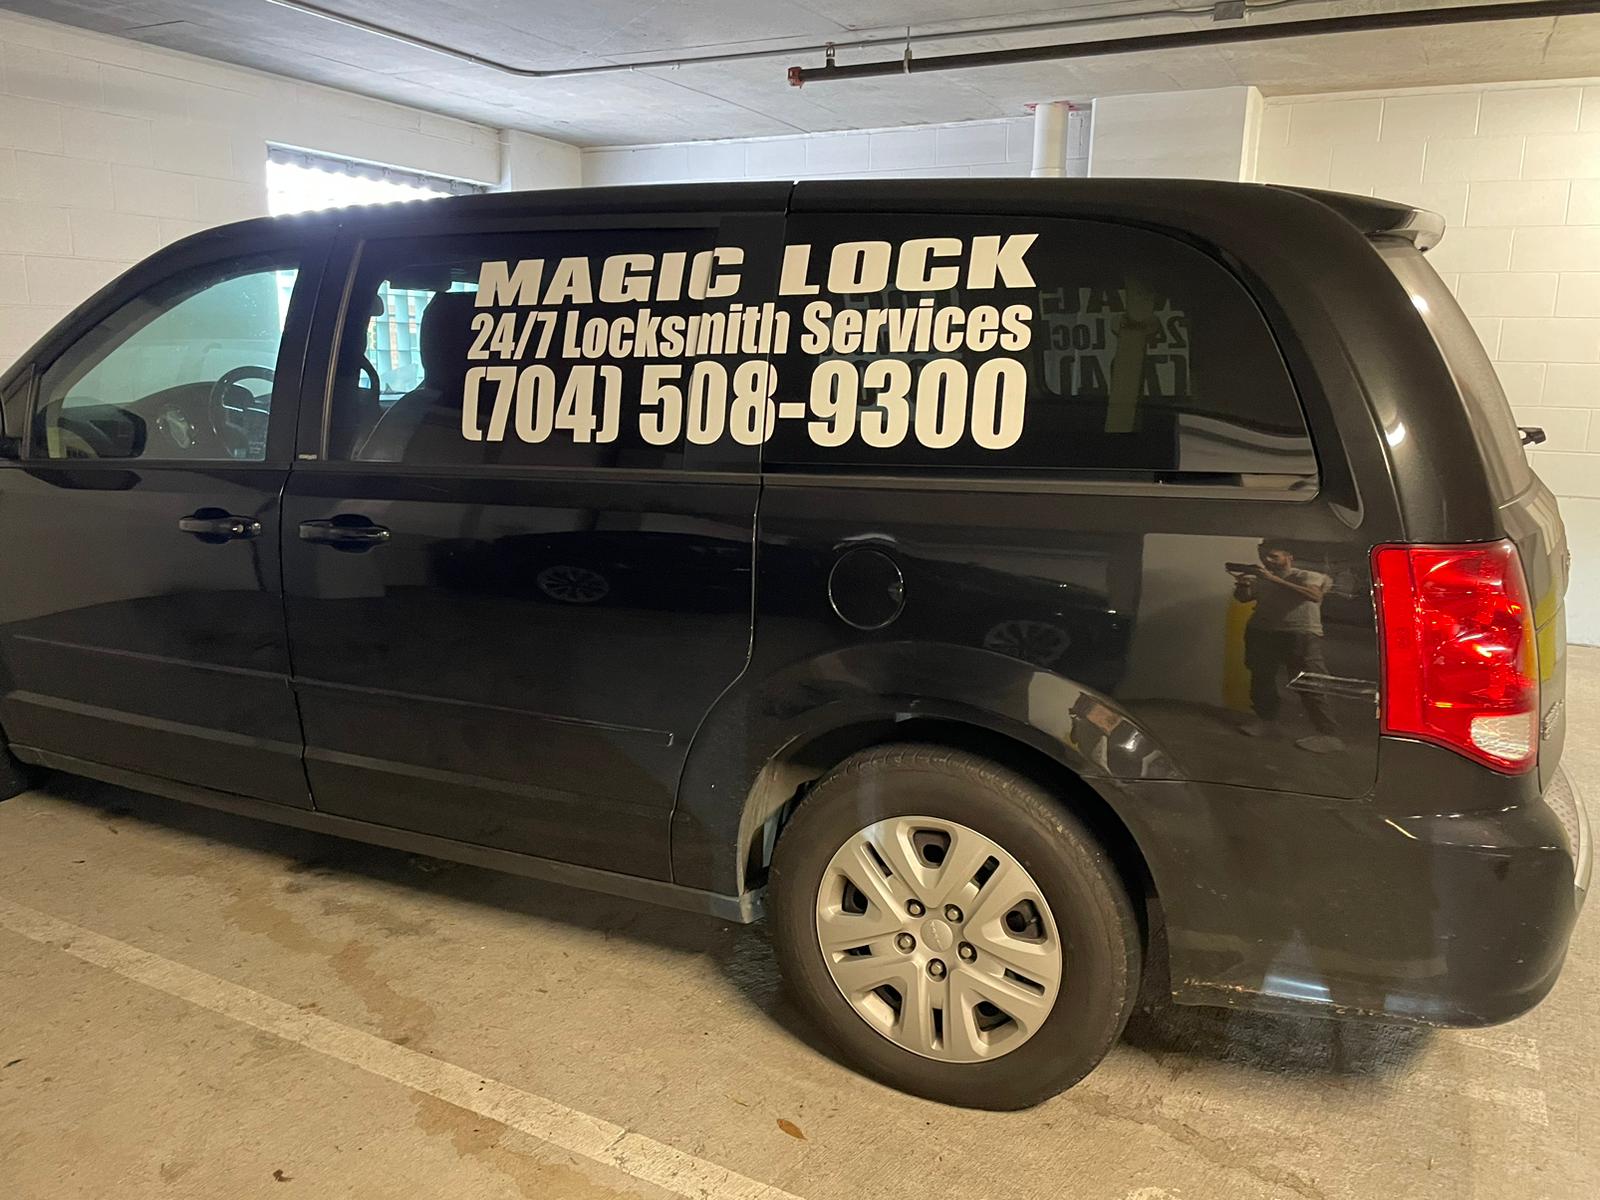 Magic lock Locksmith Services 18